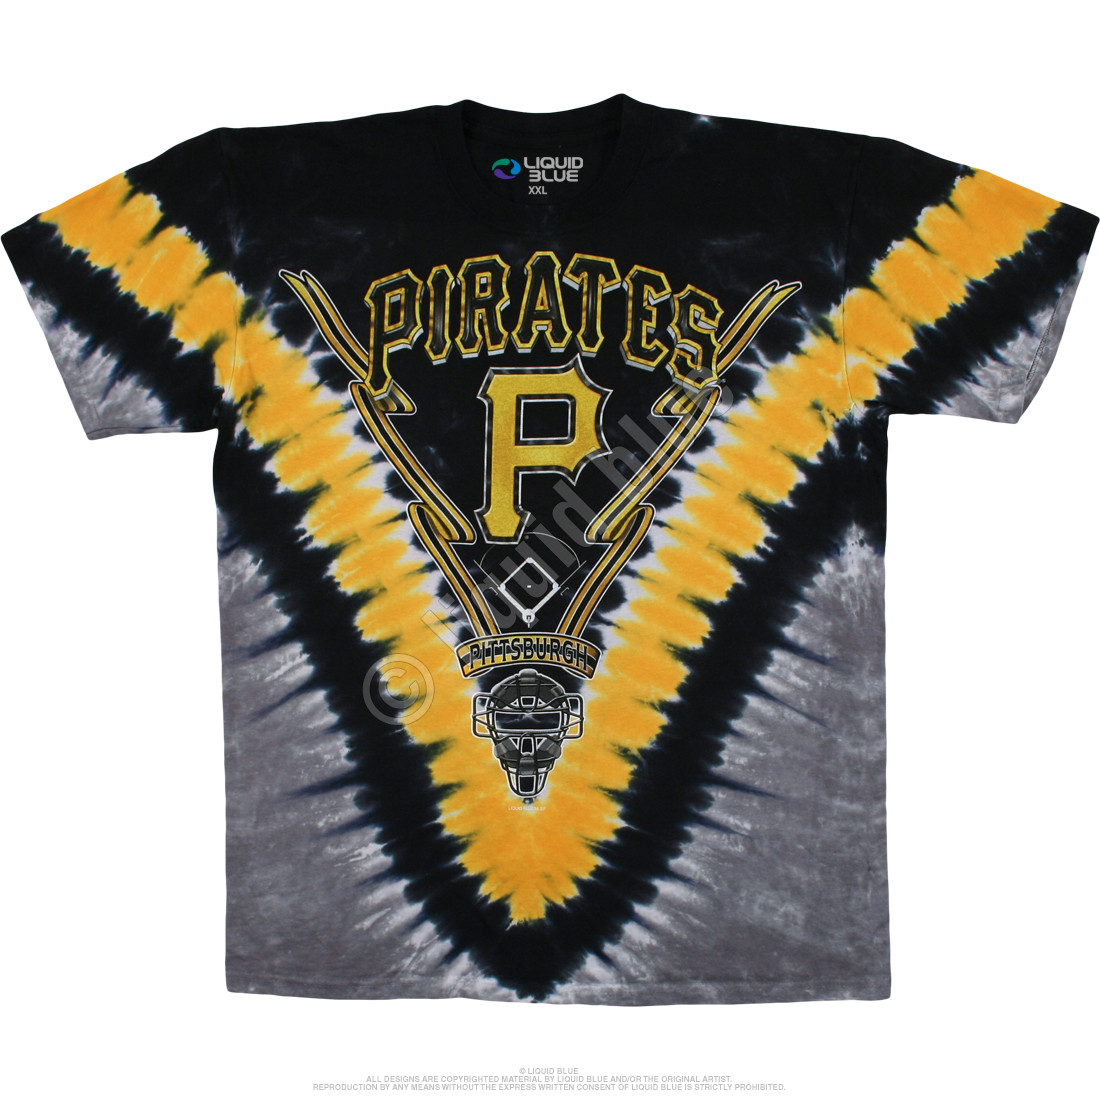 pirates t shirt pittsburgh